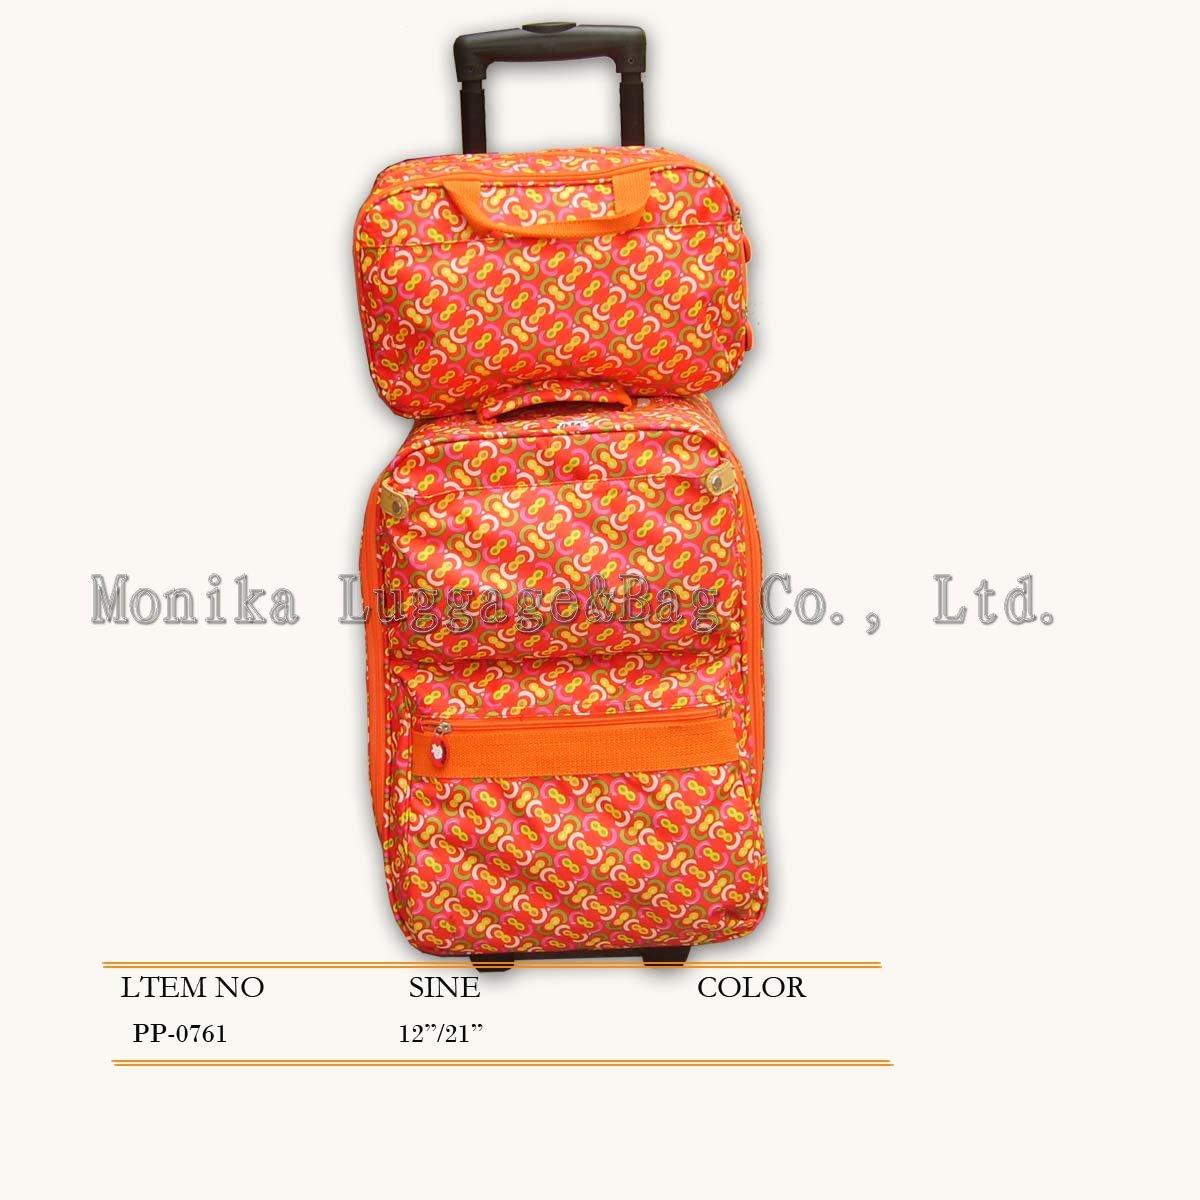 Luggage Bag (LS-021#)